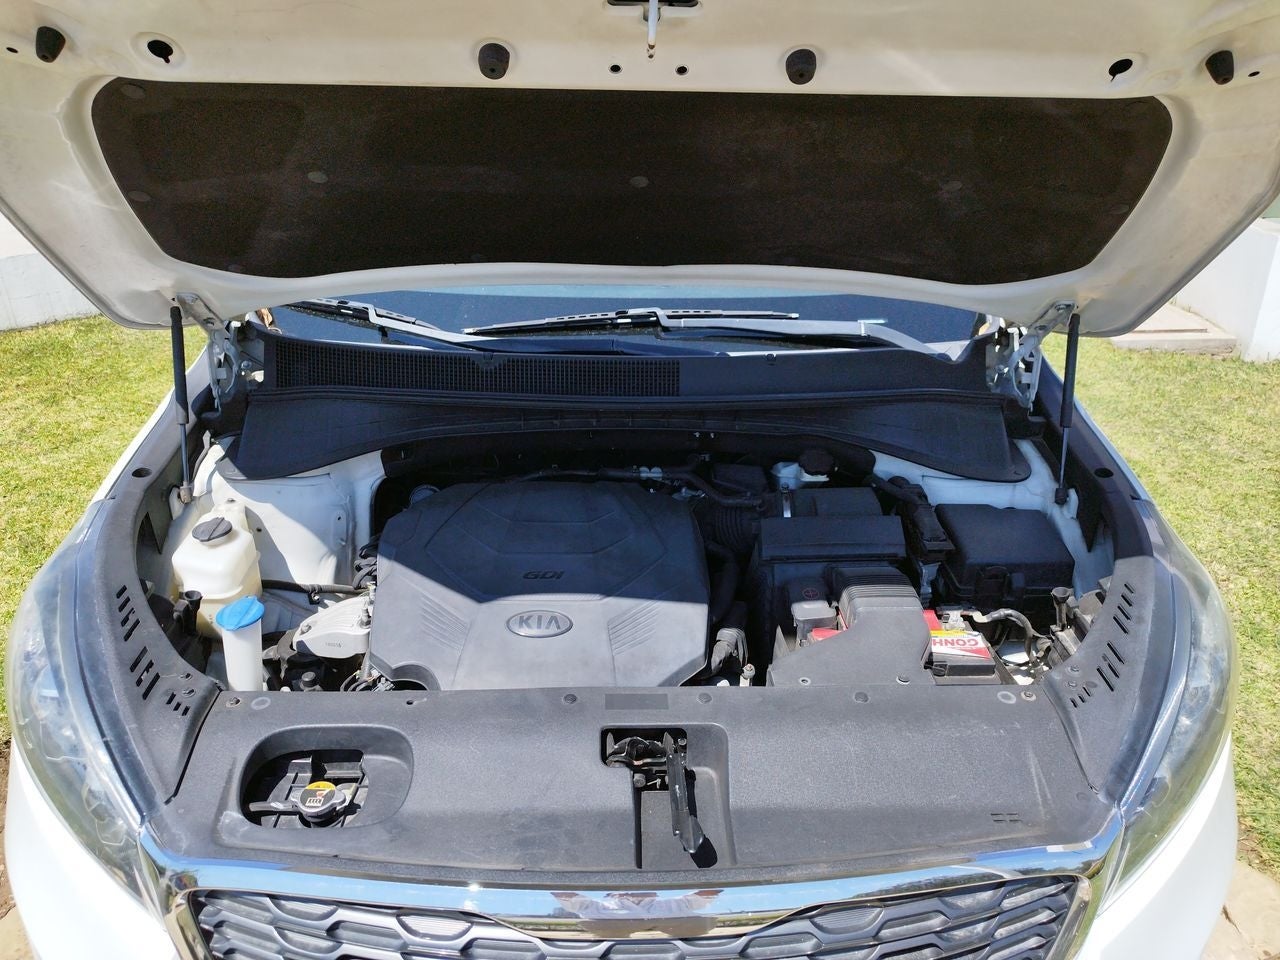 2019 Kia Sorento 3.3 V6 Ex Pack Piel 7 Pasajeros At